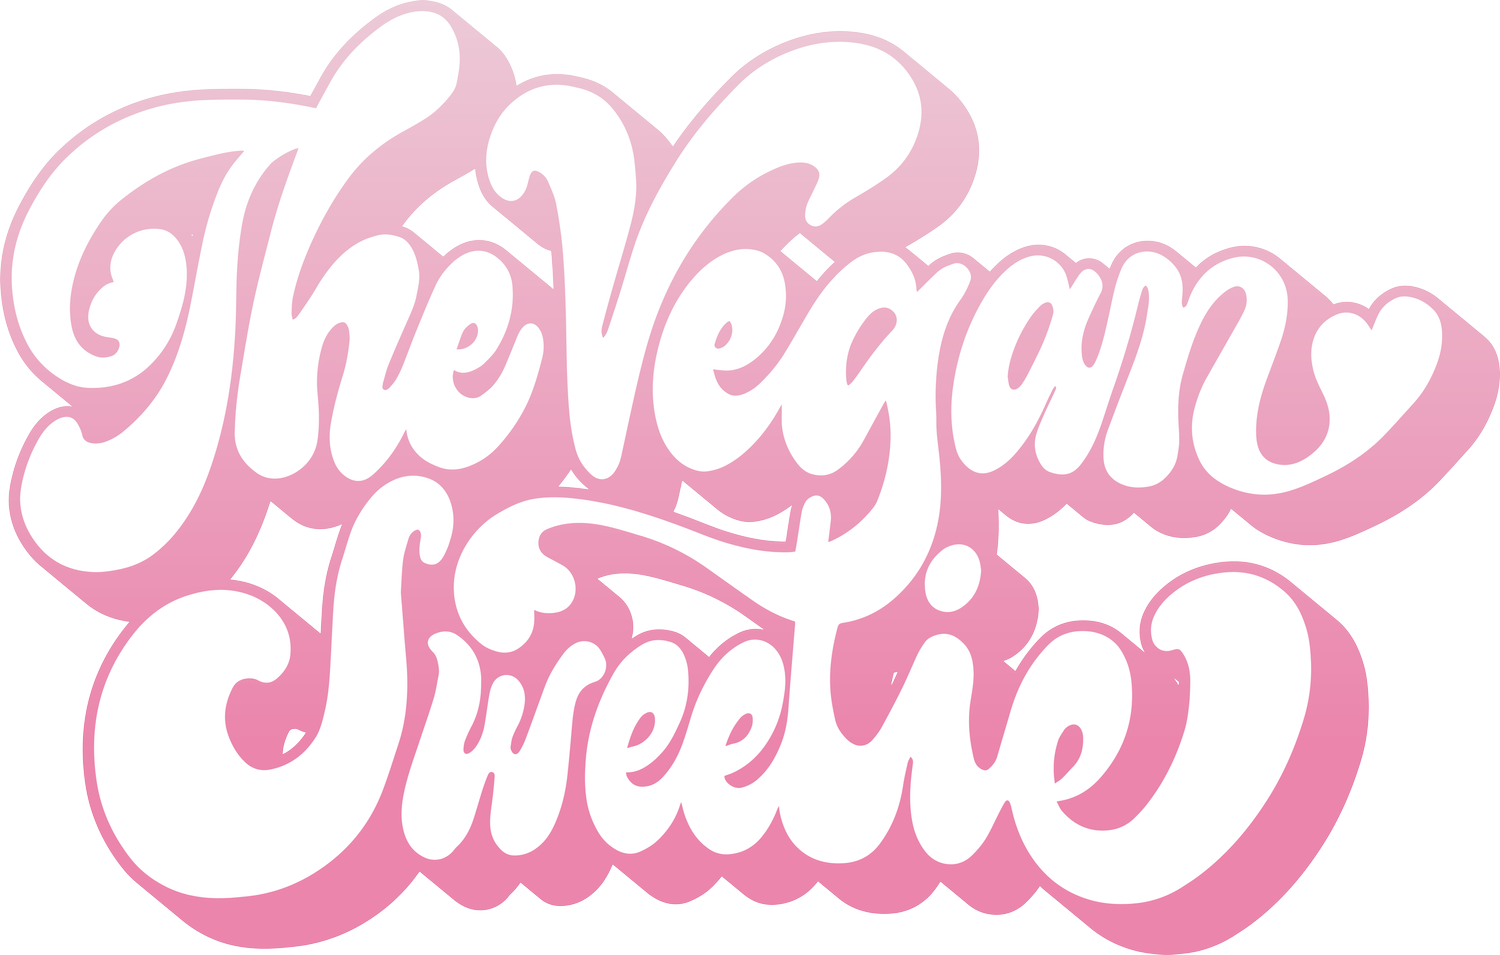  The Vegan Sweetie Bakery